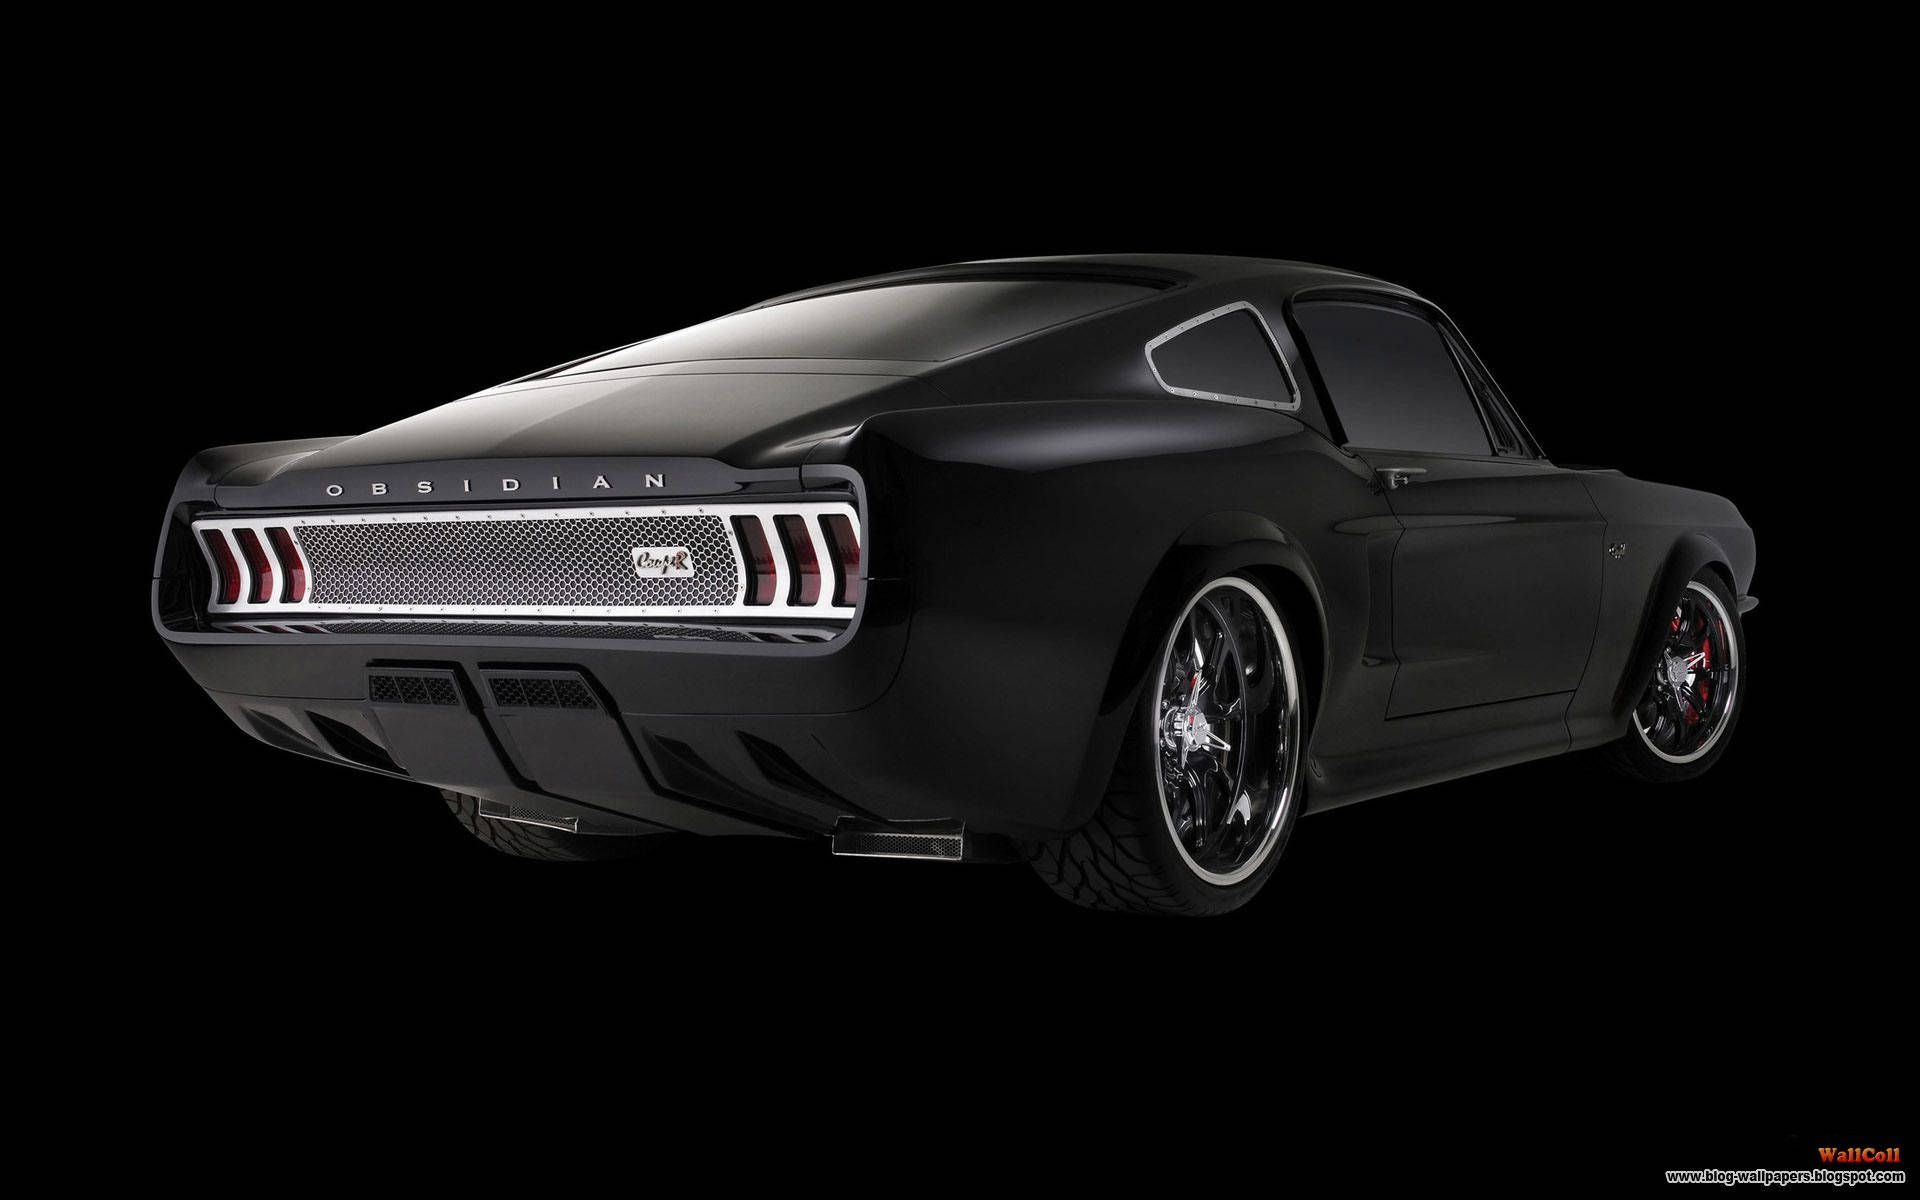 Obsidian SG-One Mustang HD Tapete: En simpel, men cool tapete med et minimalistisk Mustang-tema. Wallpaper